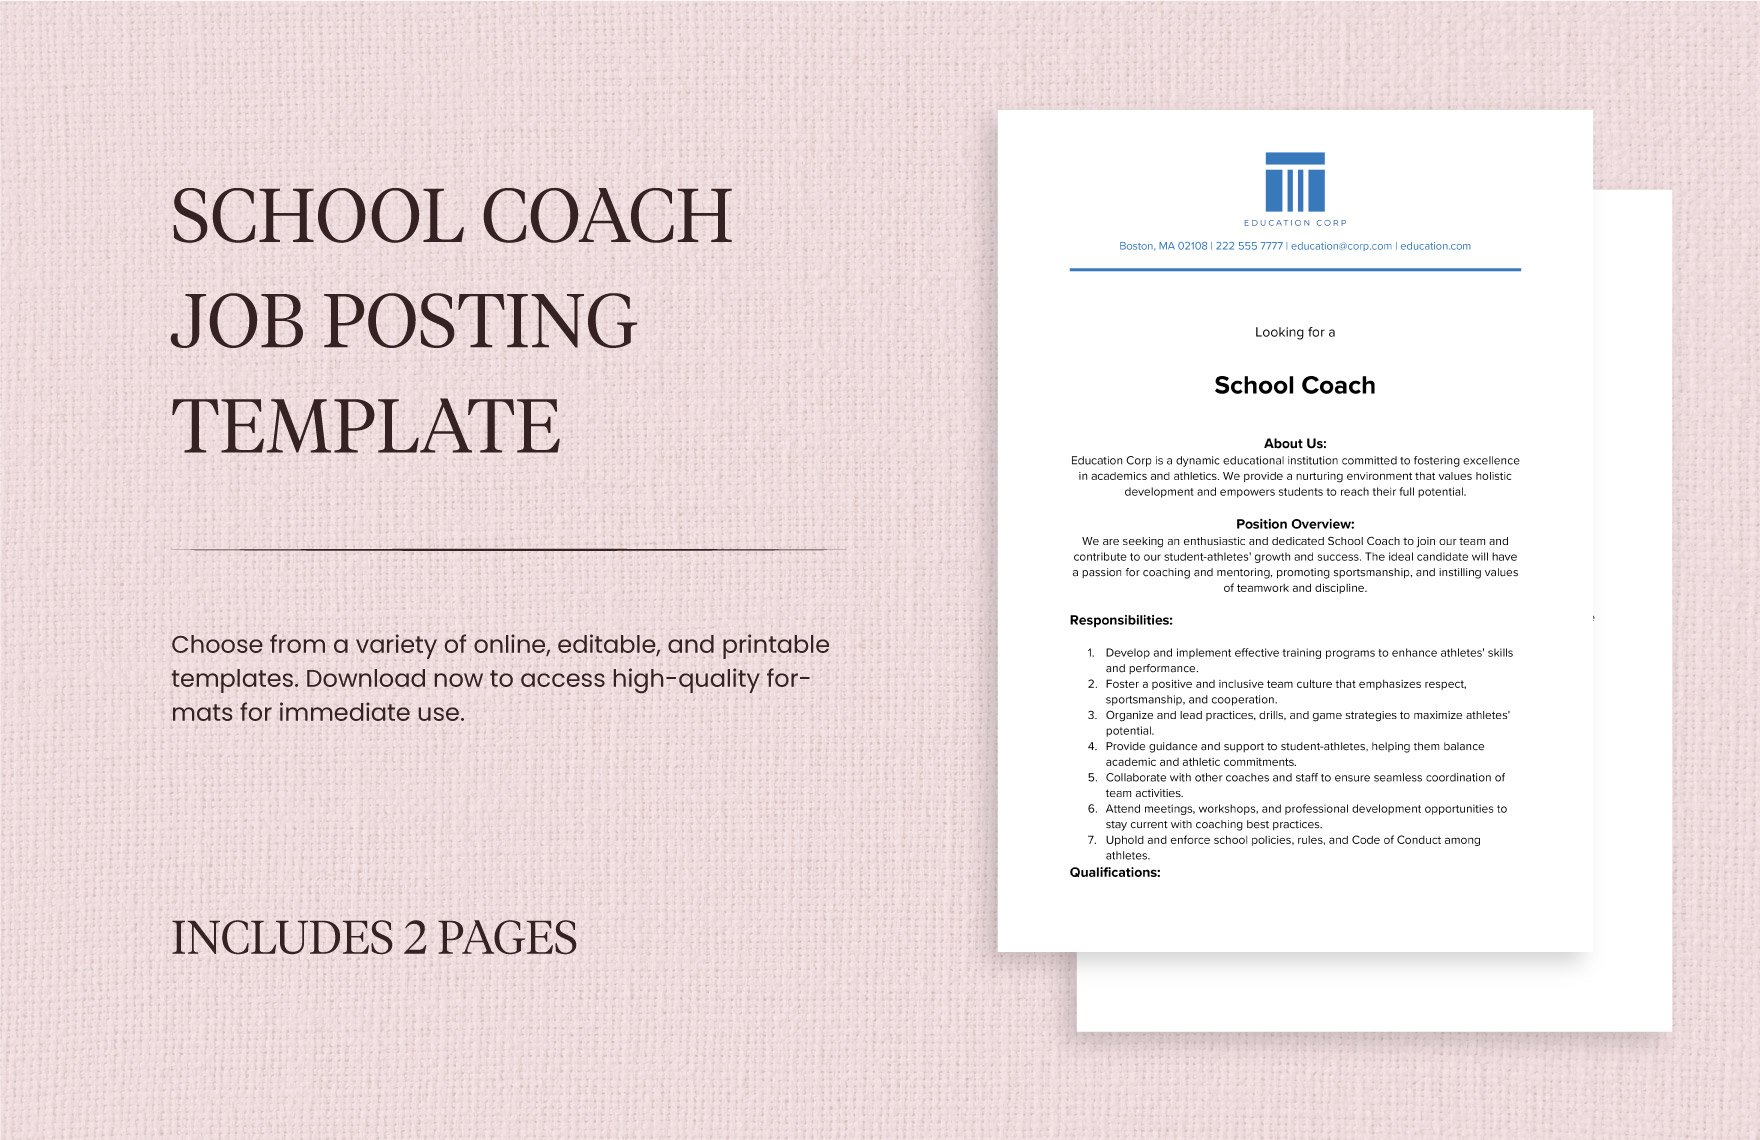 School Coach Job Posting Template in Word, Google Docs, PDF